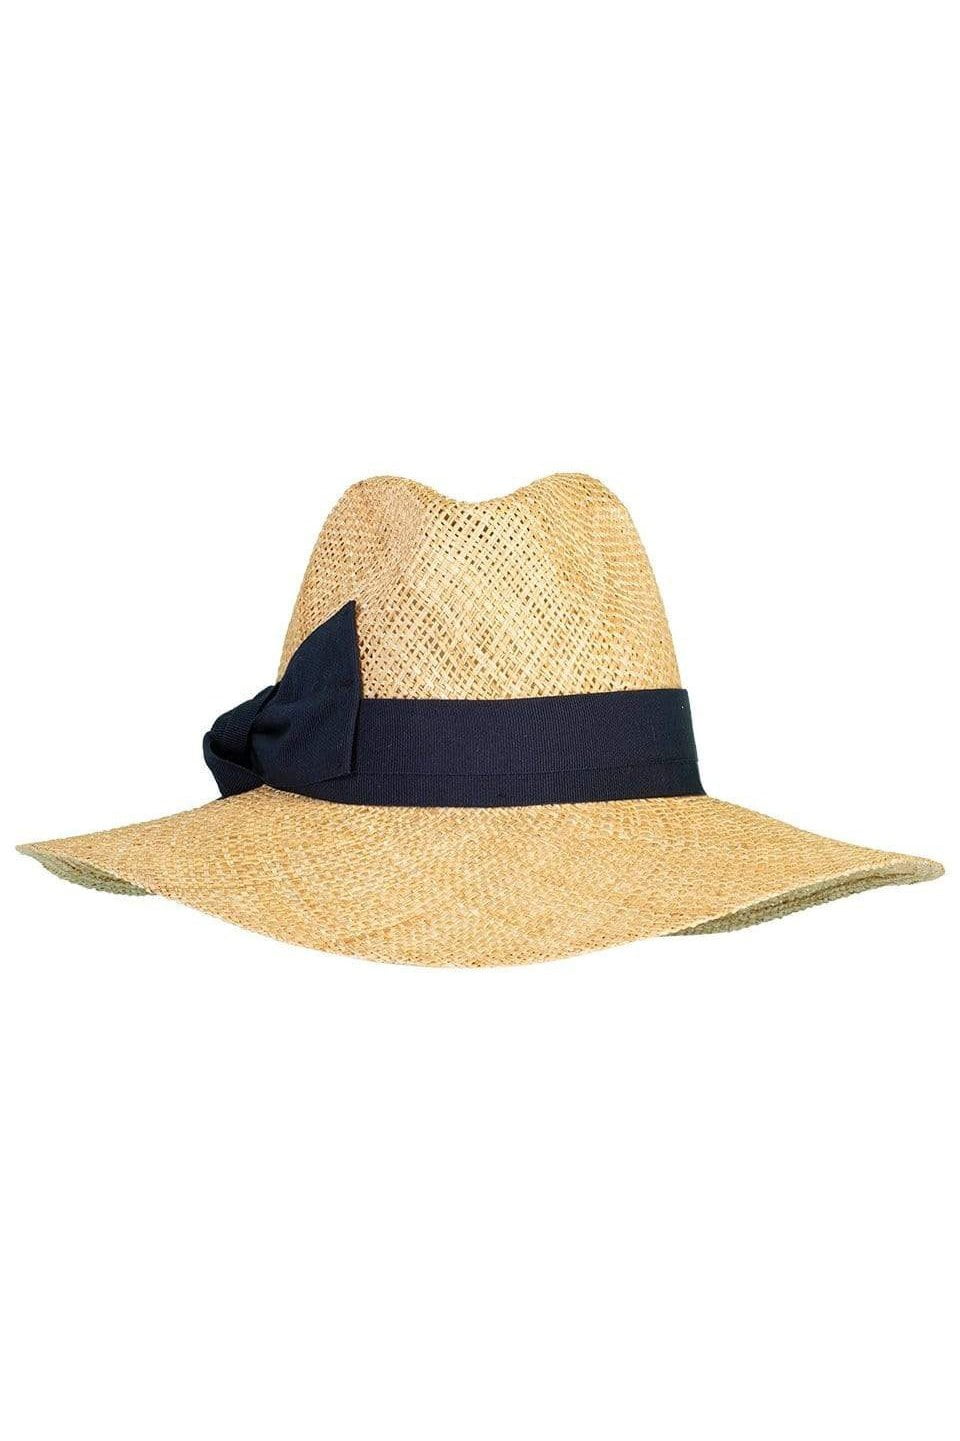 RAFFAELLO BETTINI-Woven Straw Hat with Bow-